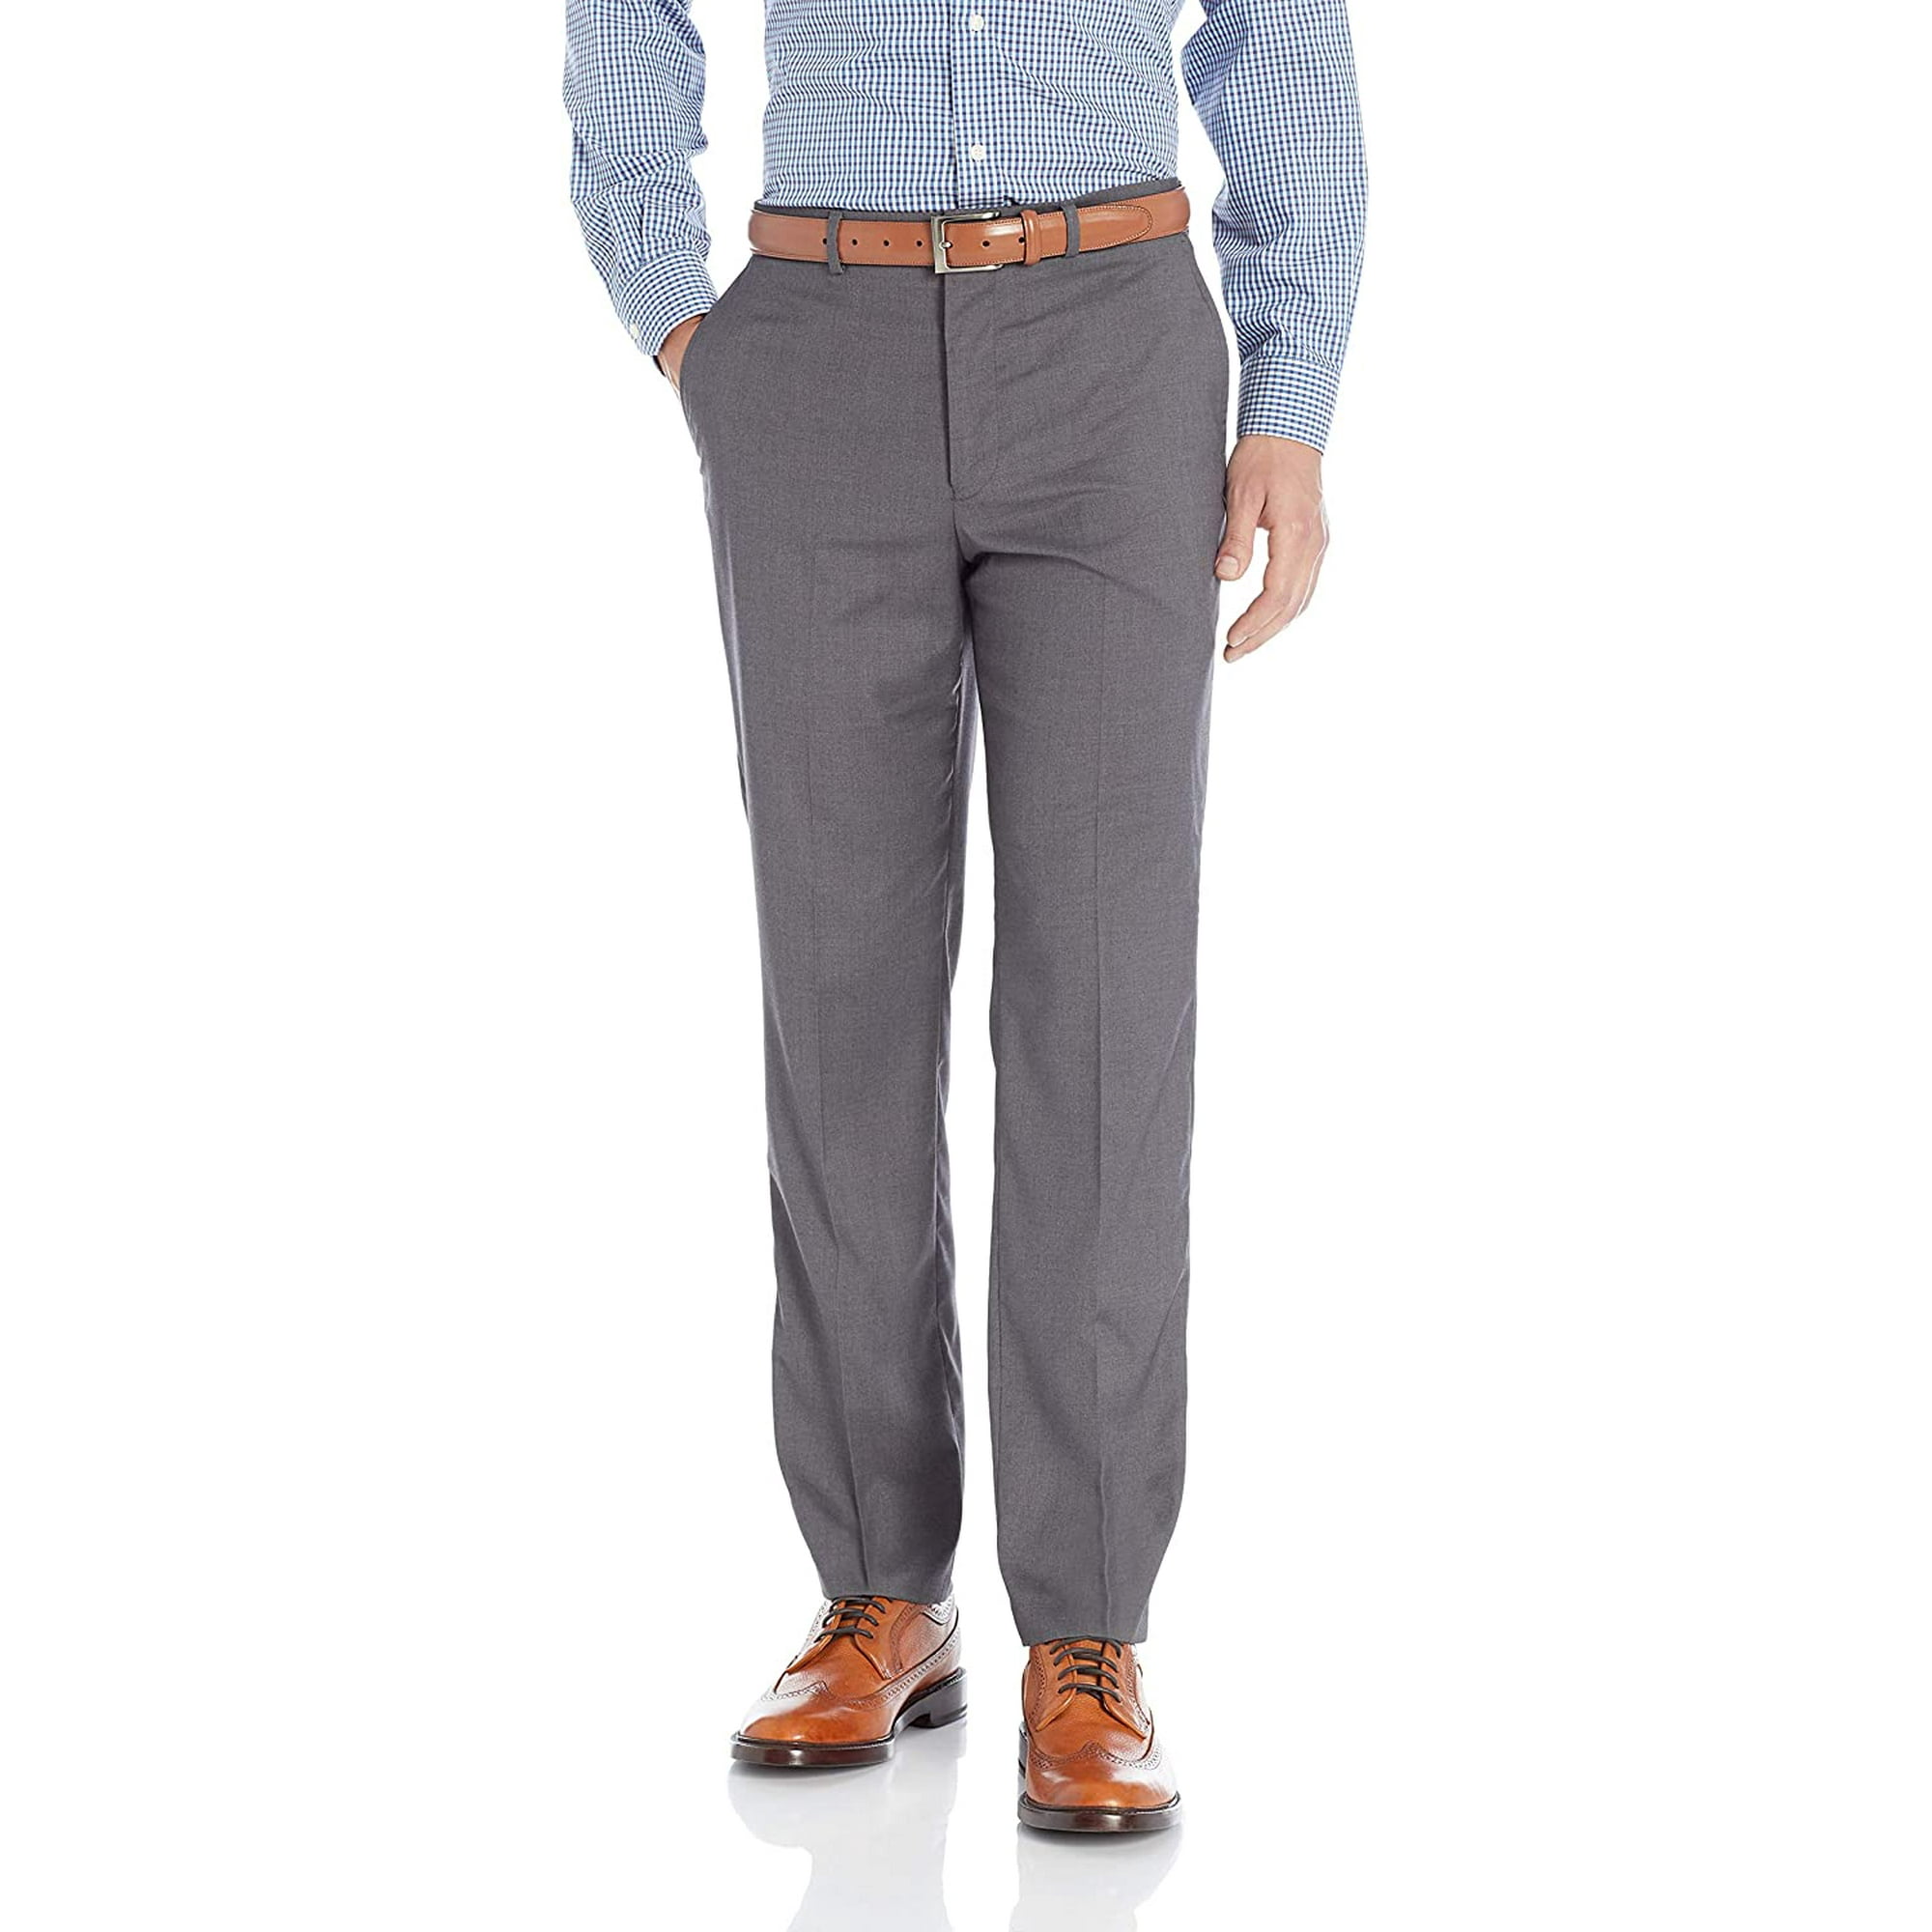 Dockers Men's Signature Slim Fit Dress Pant with Stretch, Medium Gray, 42x30 | Walmart